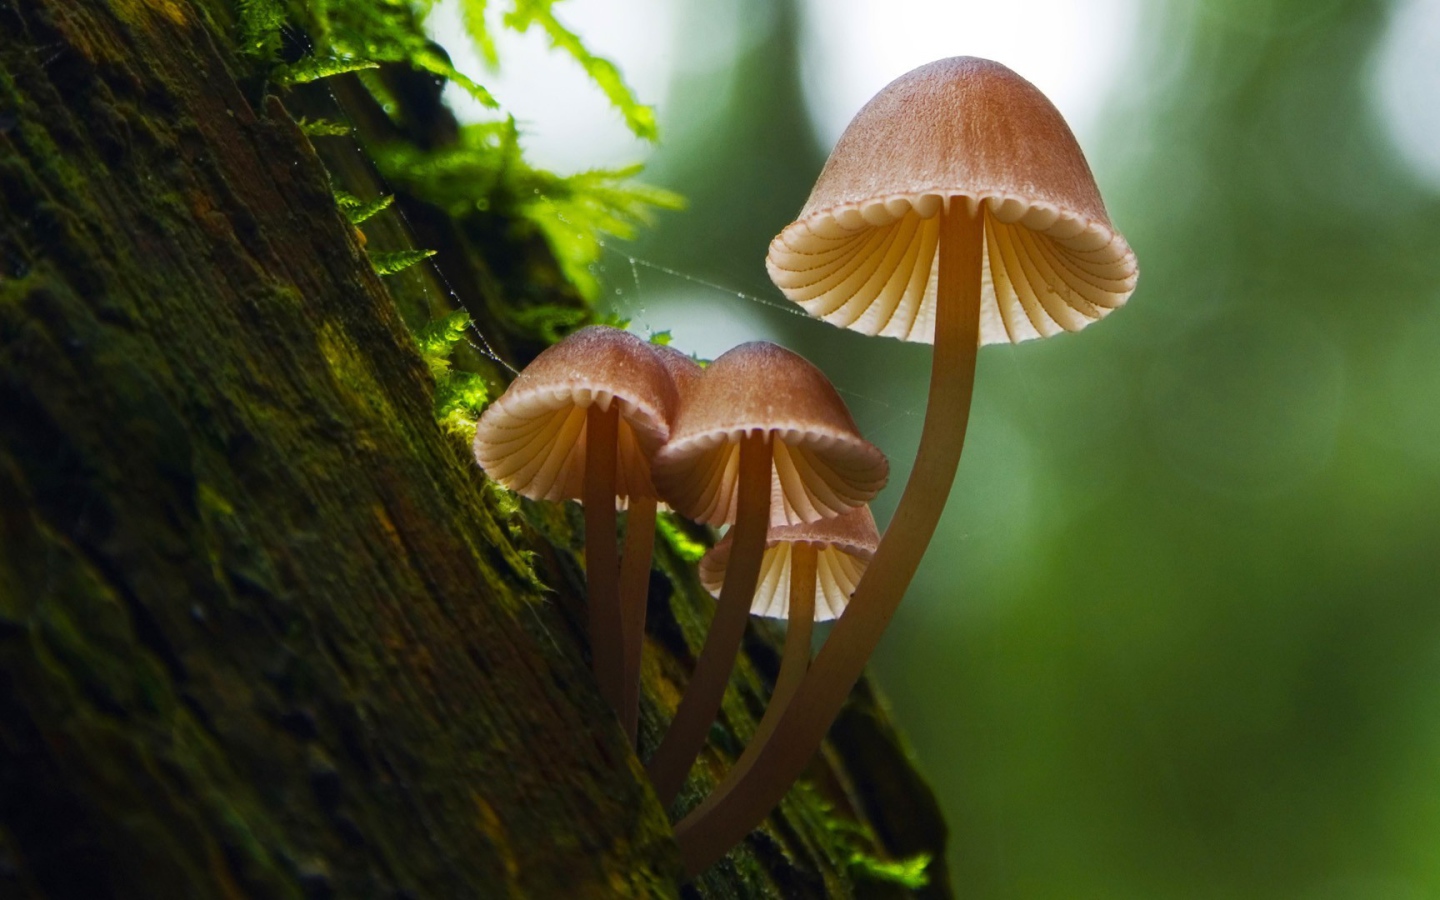 Family of mushrooms on tree bark